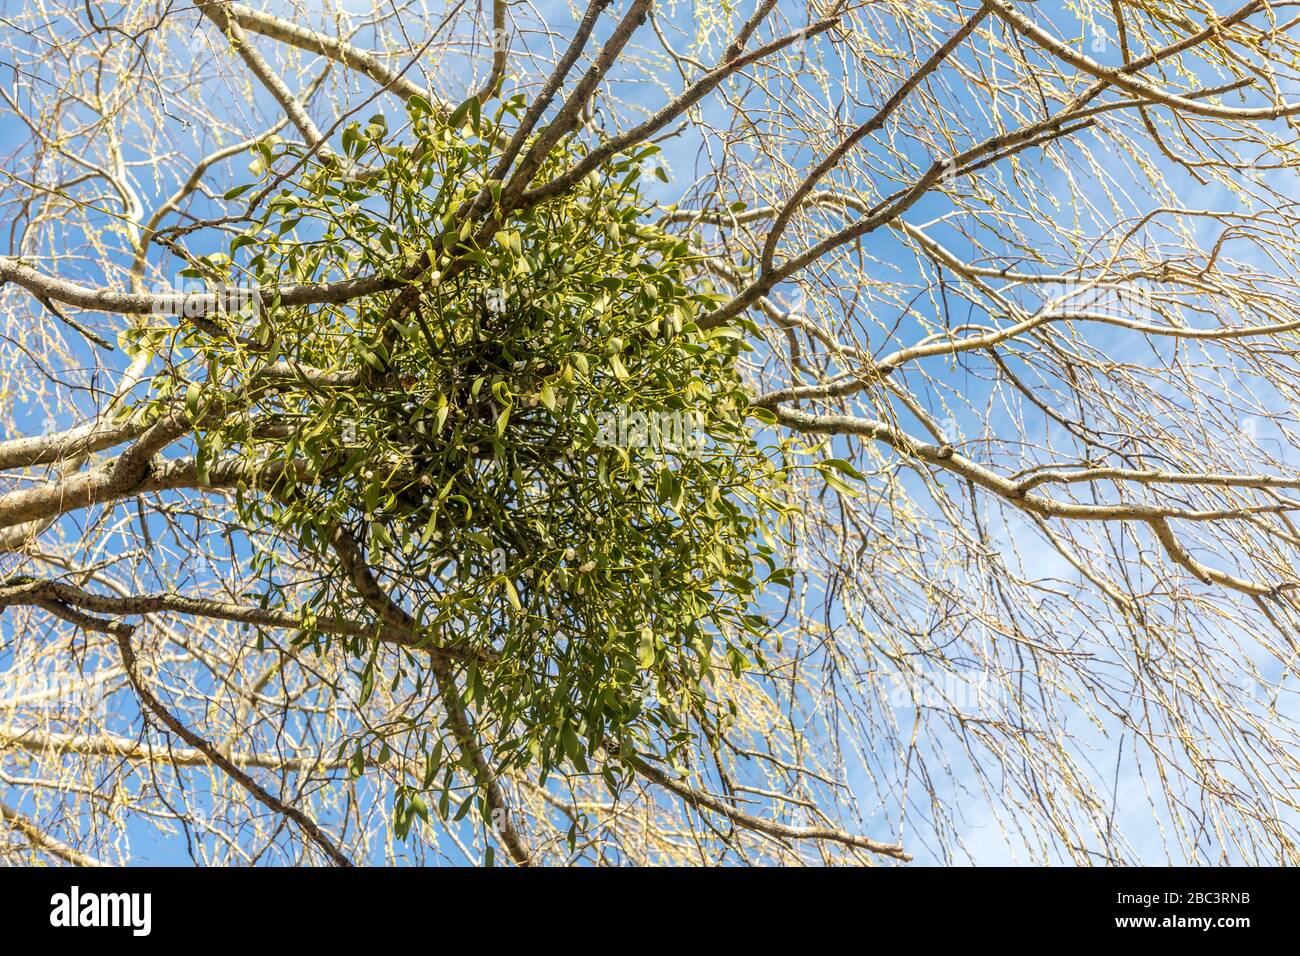 Mistletoe in tree, Chepstow, Wales, UK Stock Photo